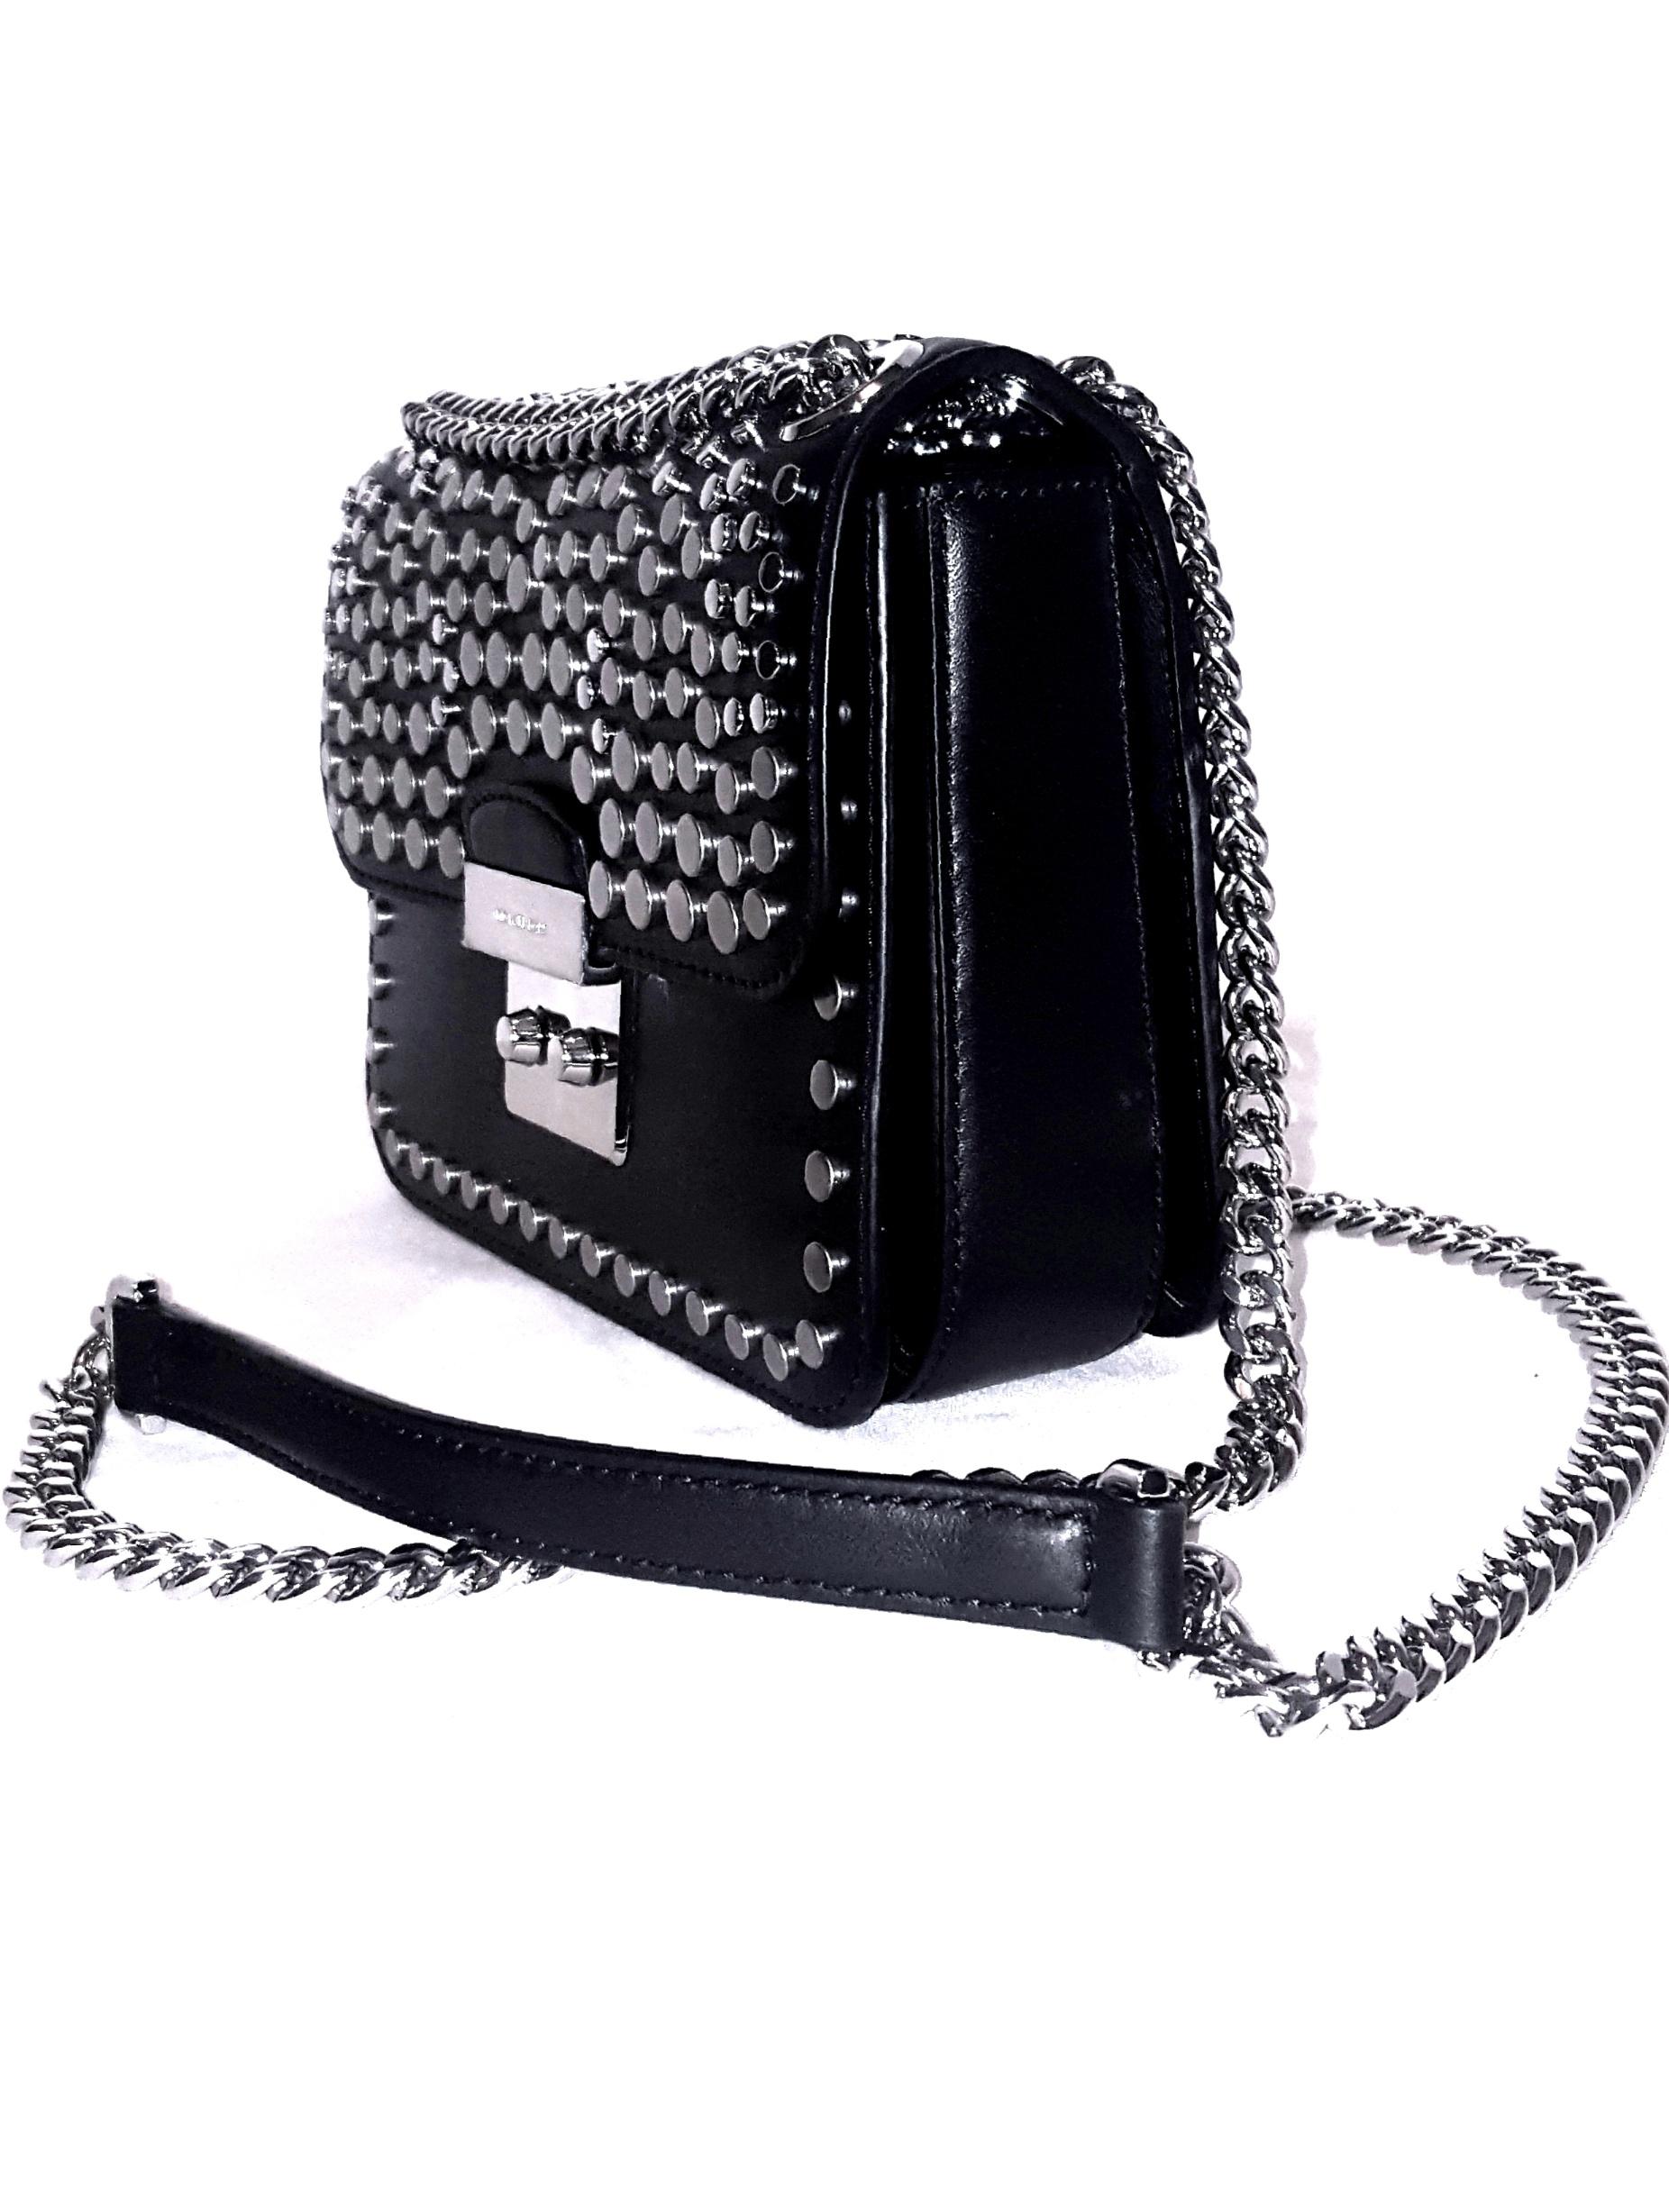 michael kors black bag with silver chain